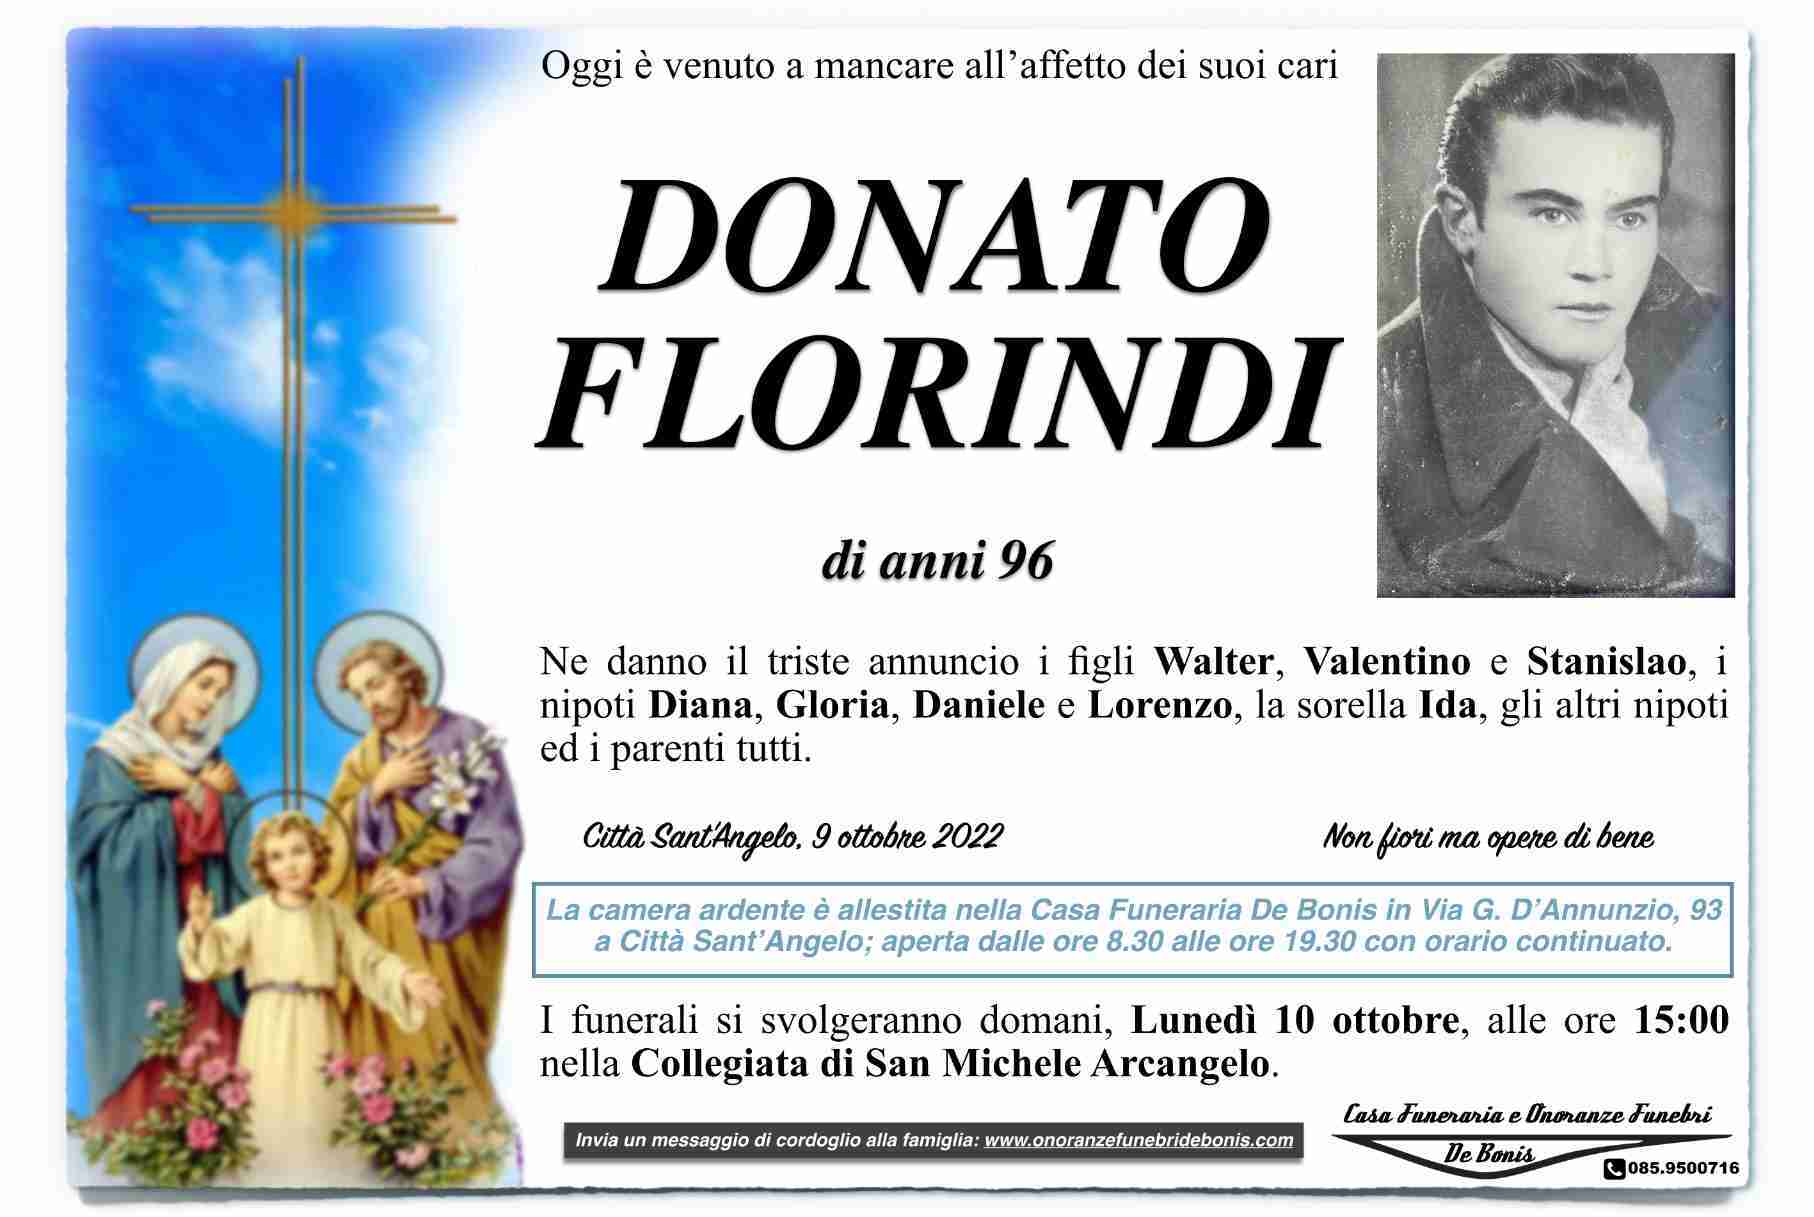 Donato Florindi